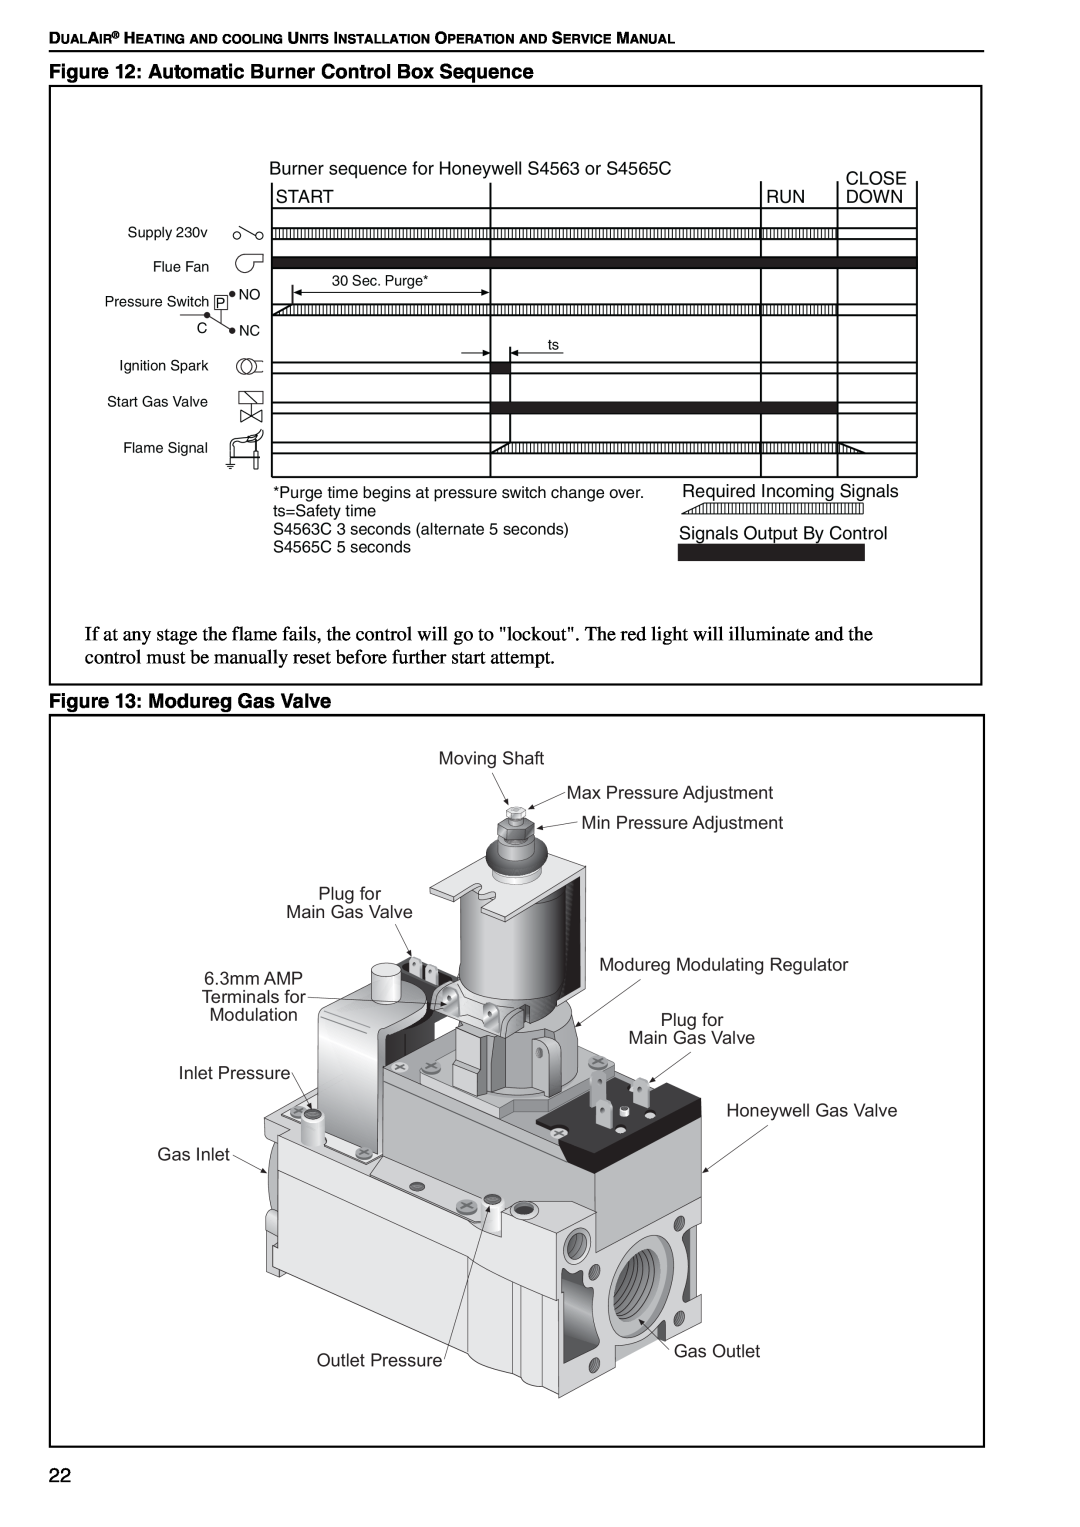 Roberts Gorden DAT75 Automatic Burner Control Box Sequence, Modureg Gas Valve, Close, Start, Down, ts=Safety time, S4563C 